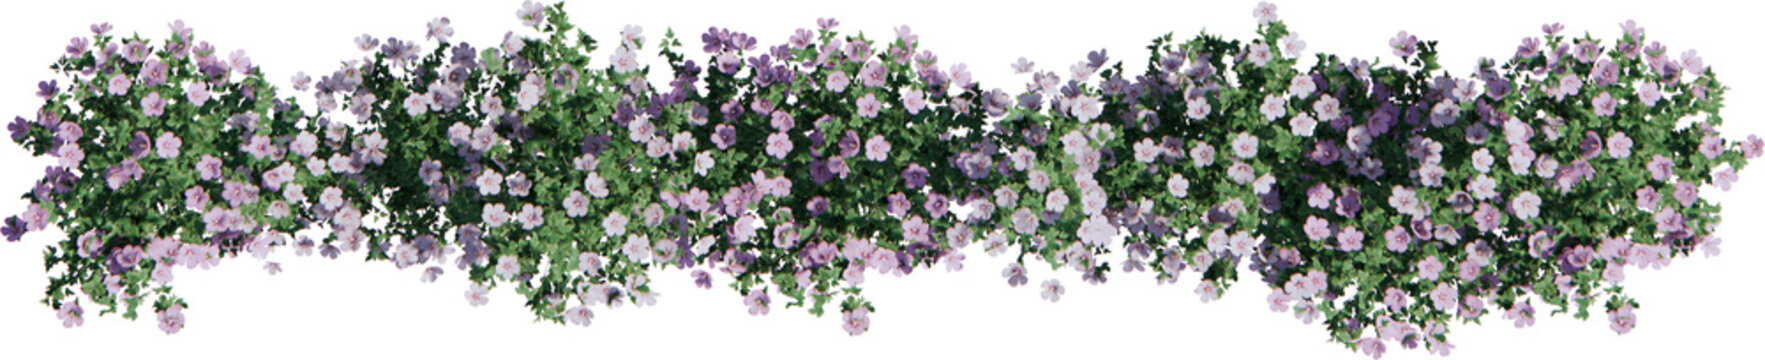 Flower bush cutout 